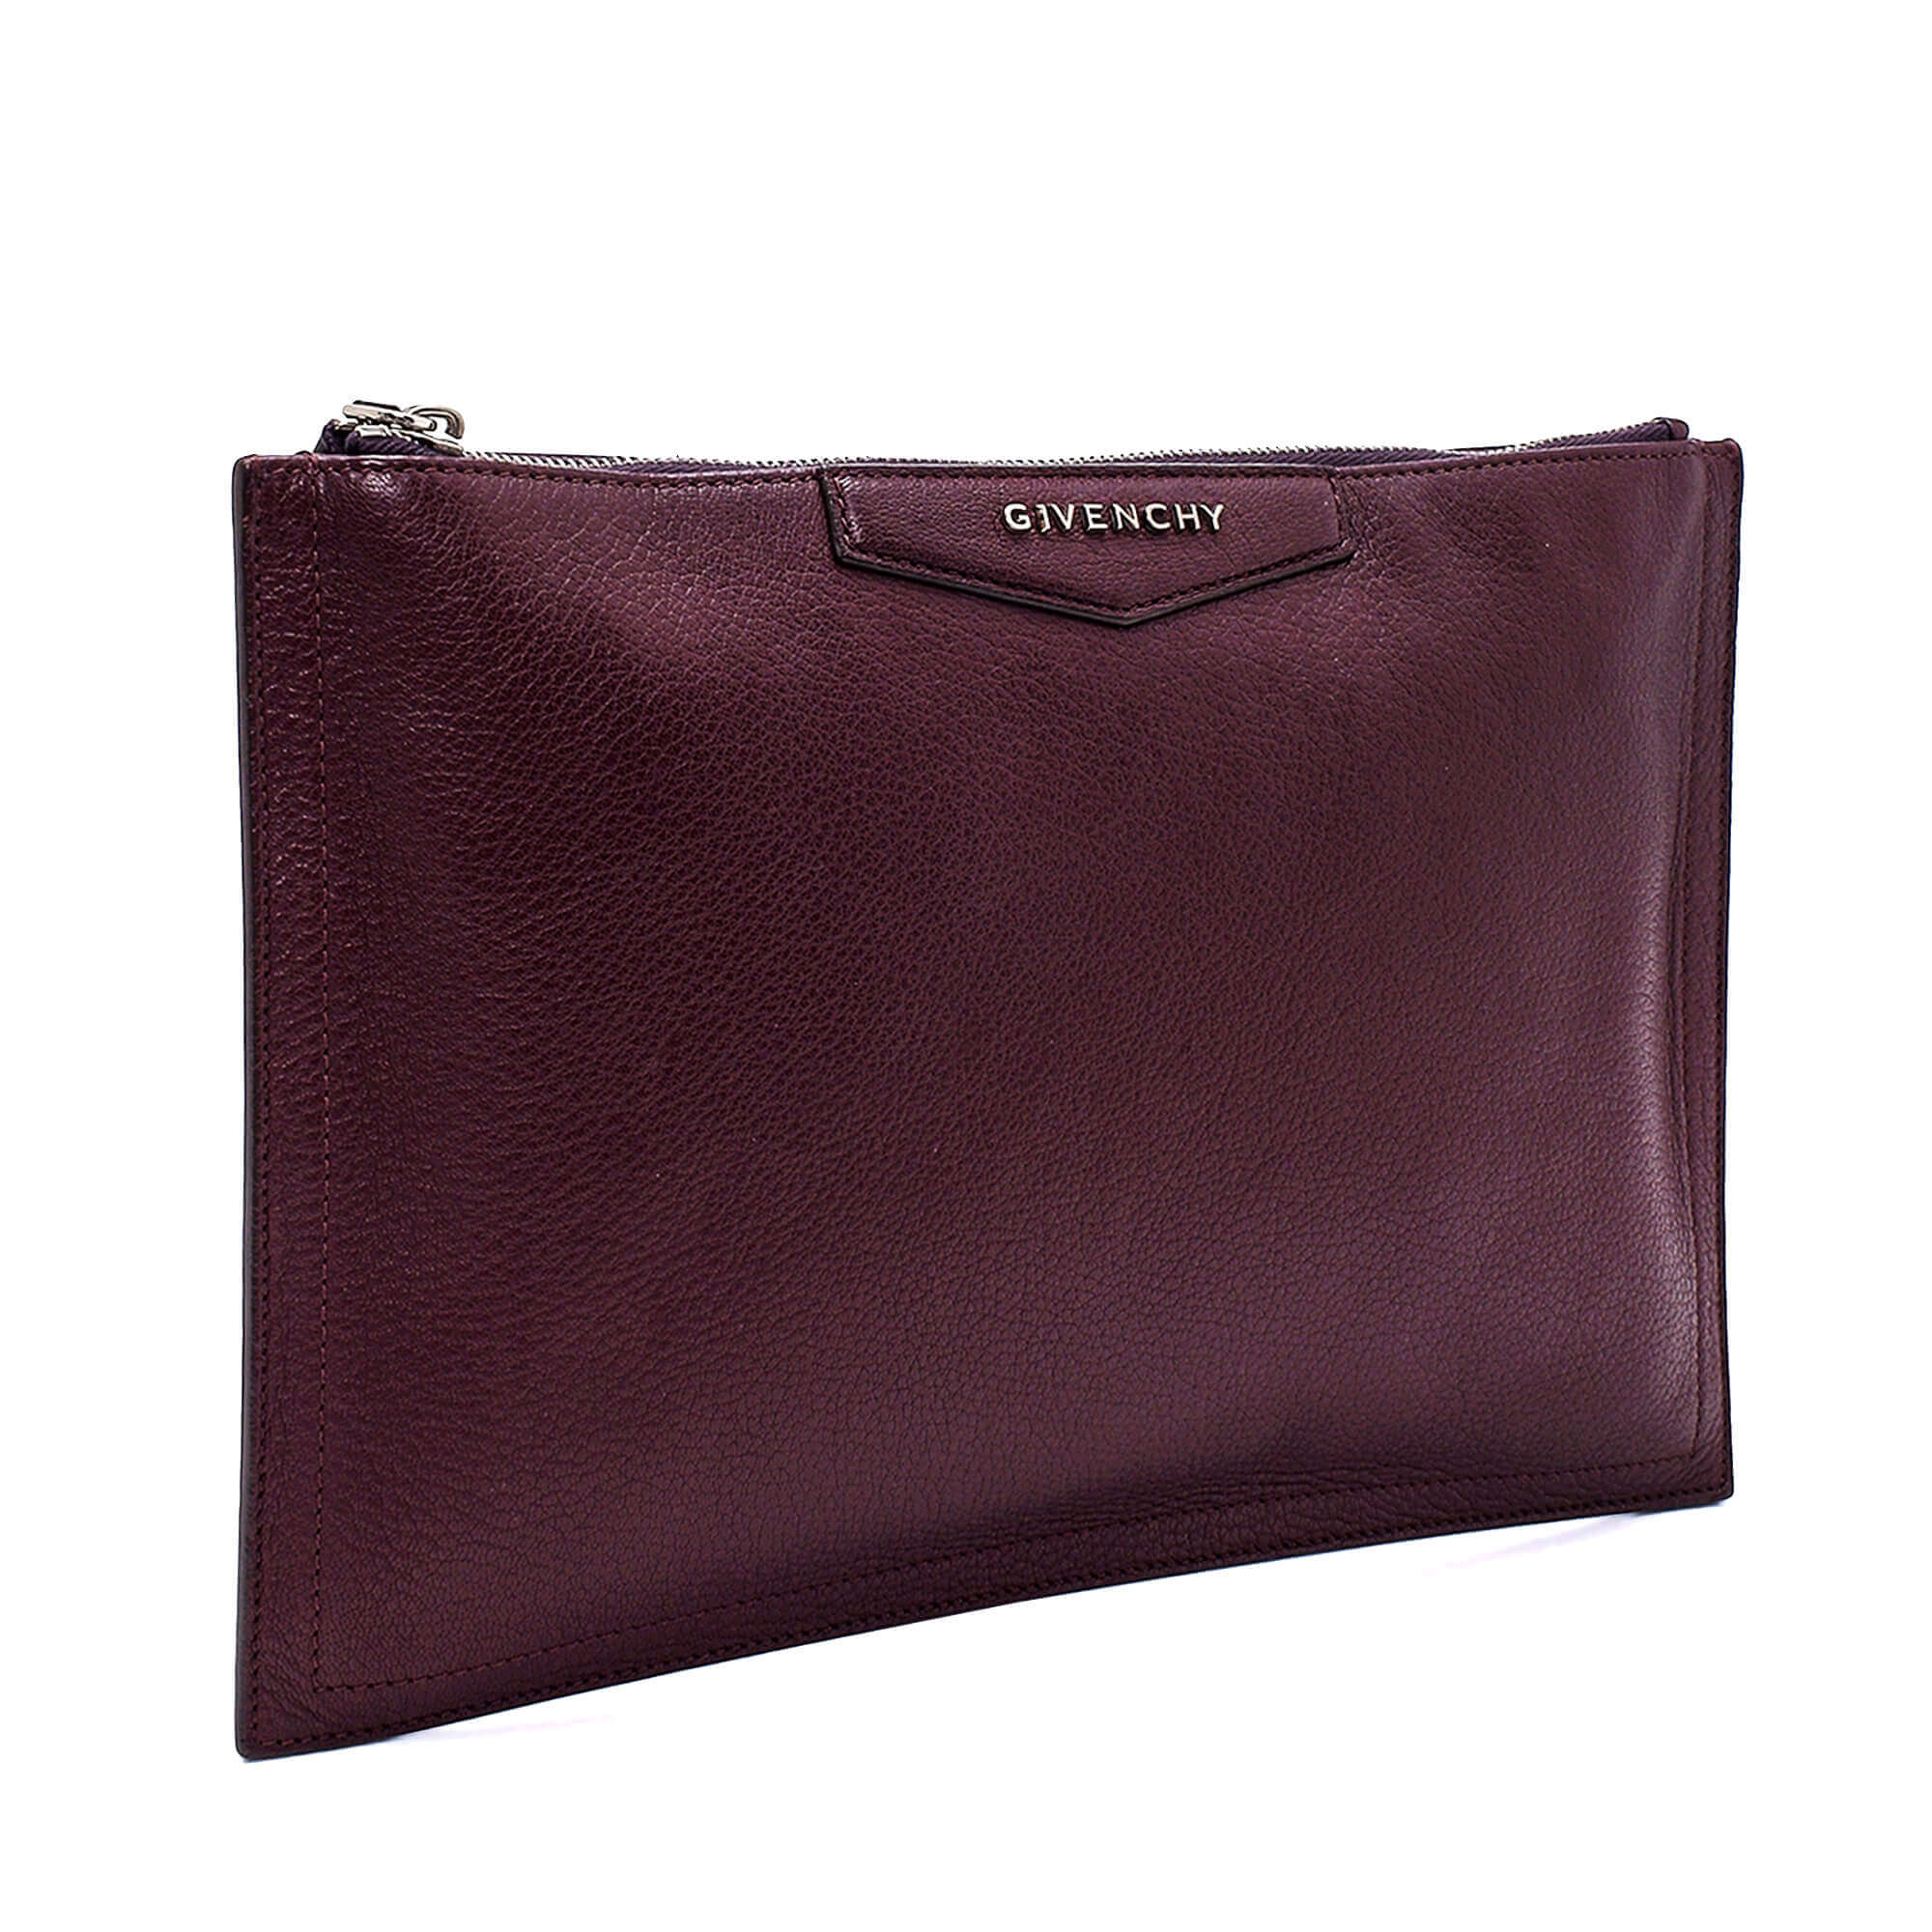 Givenchy - Burgundy Grained Leather Zipped Antigona Clutch 